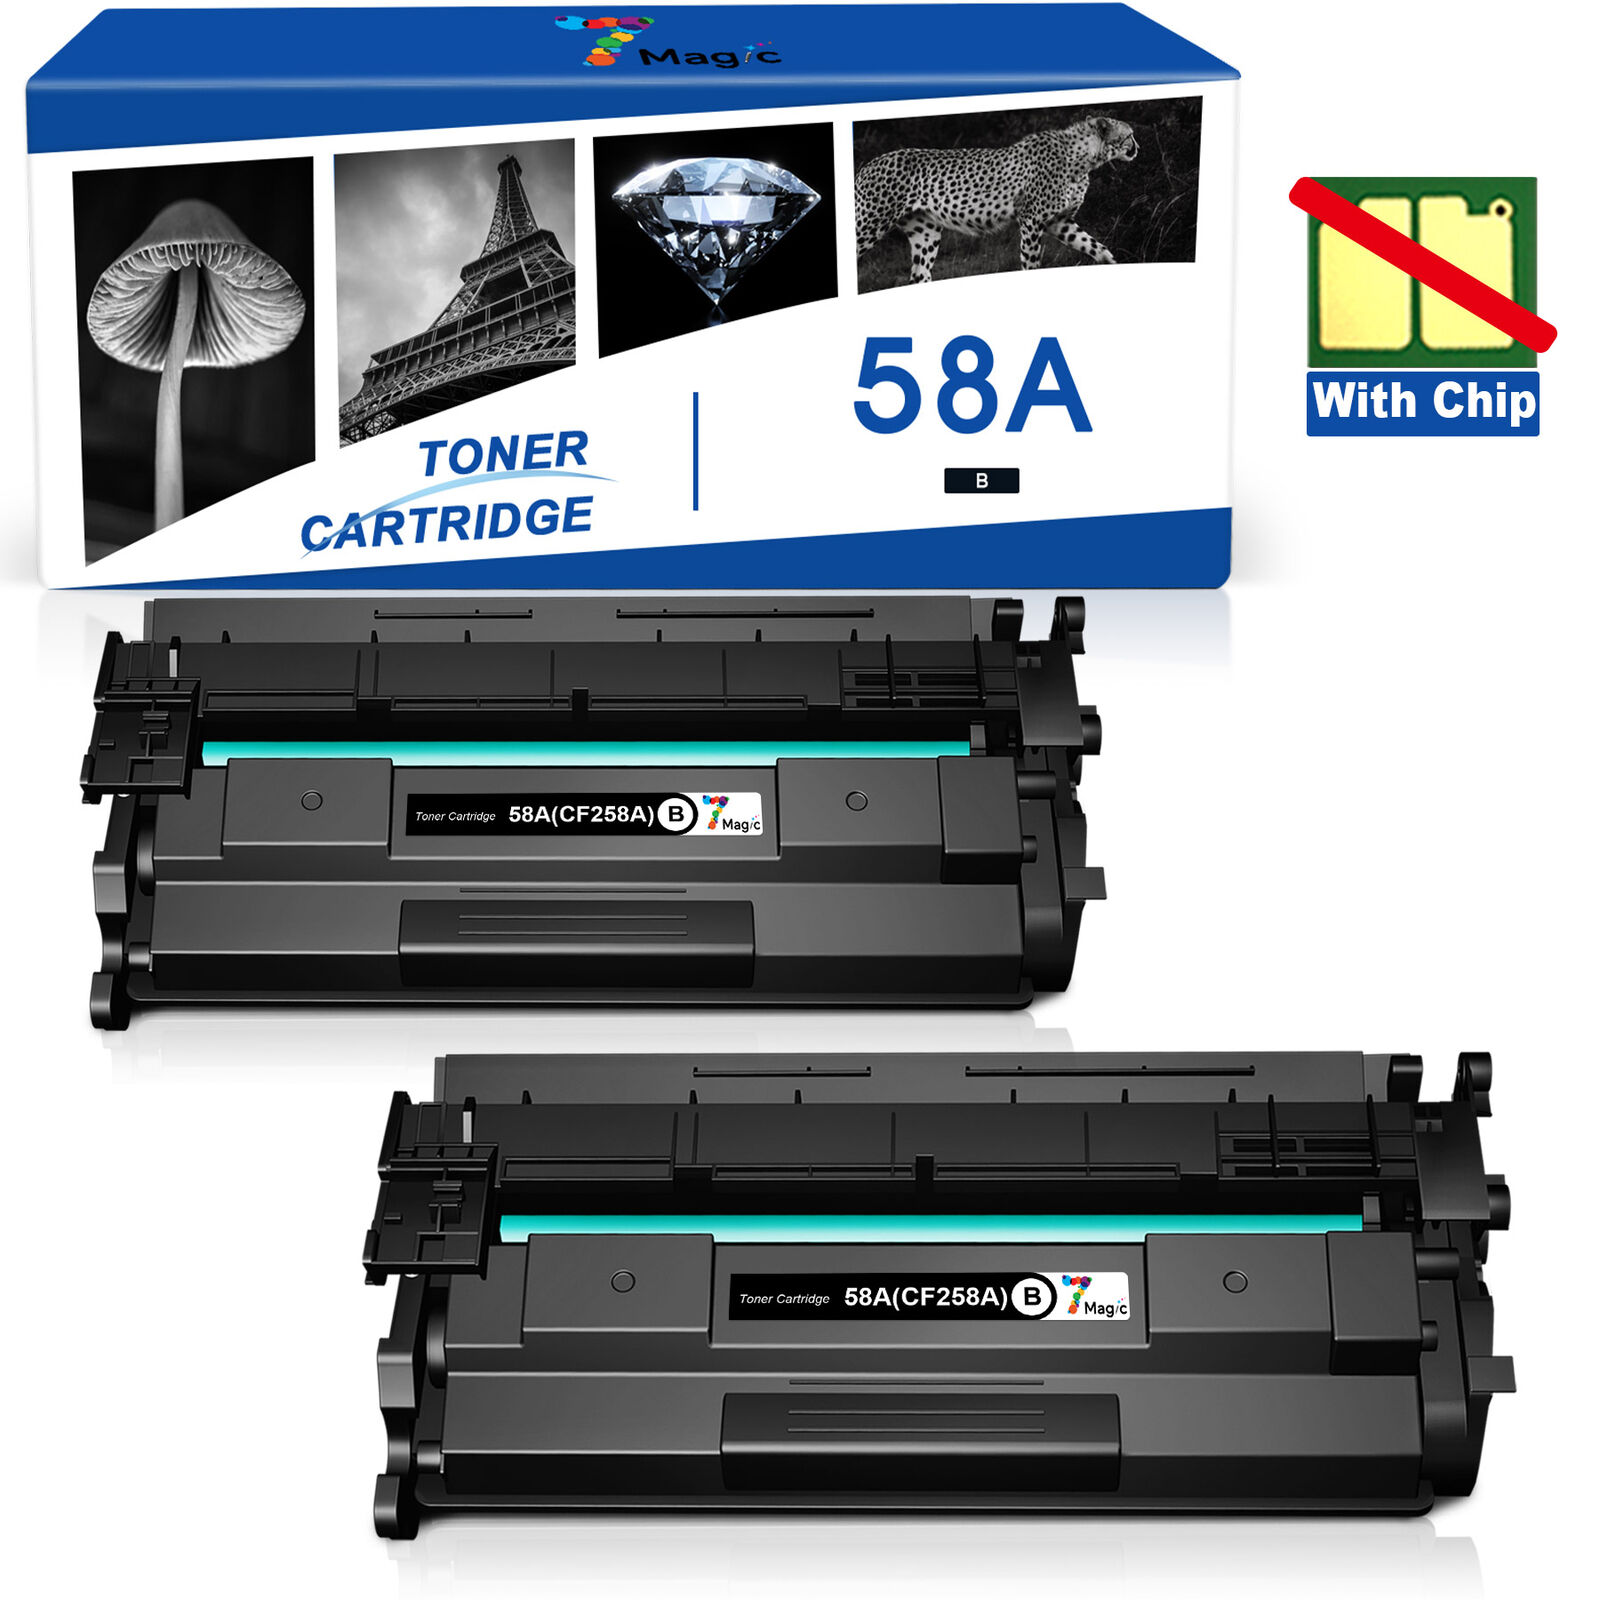 2x Toner replacement for HP CF258A No Chip LaserJet M404dn M404dw M304 M428dw